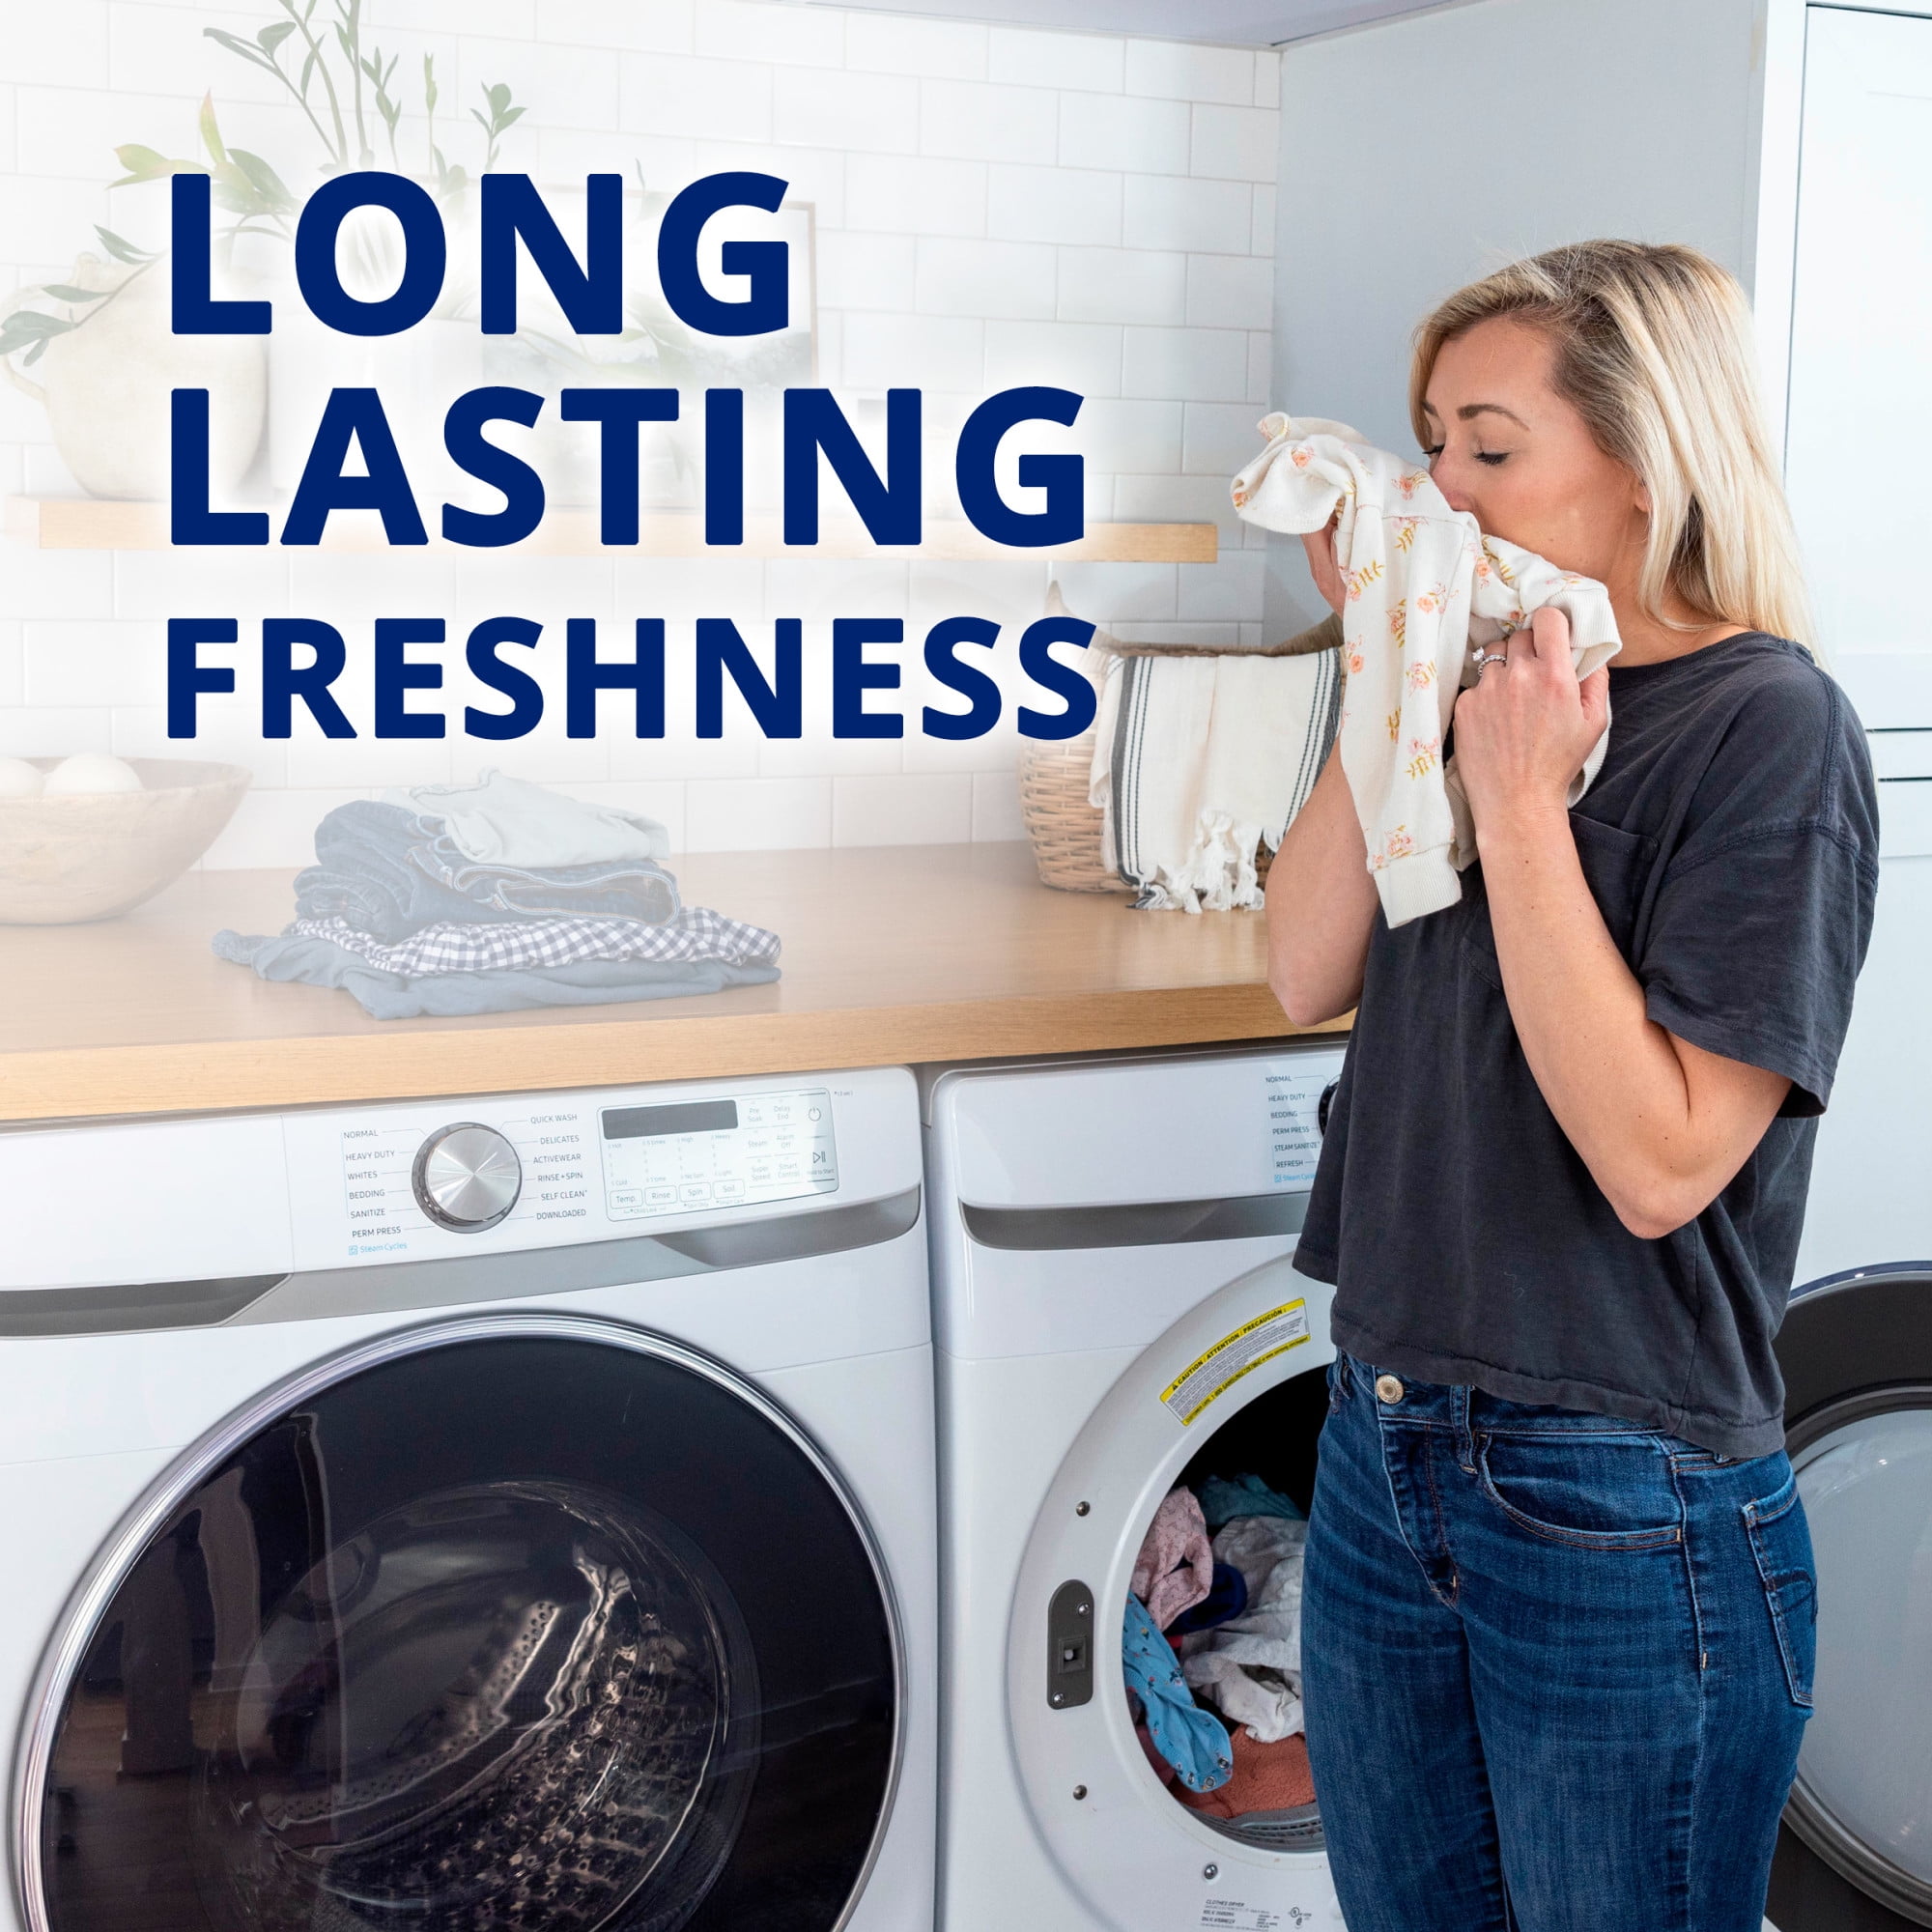 Persil Original HE Laundry Detergent (100-fl oz)